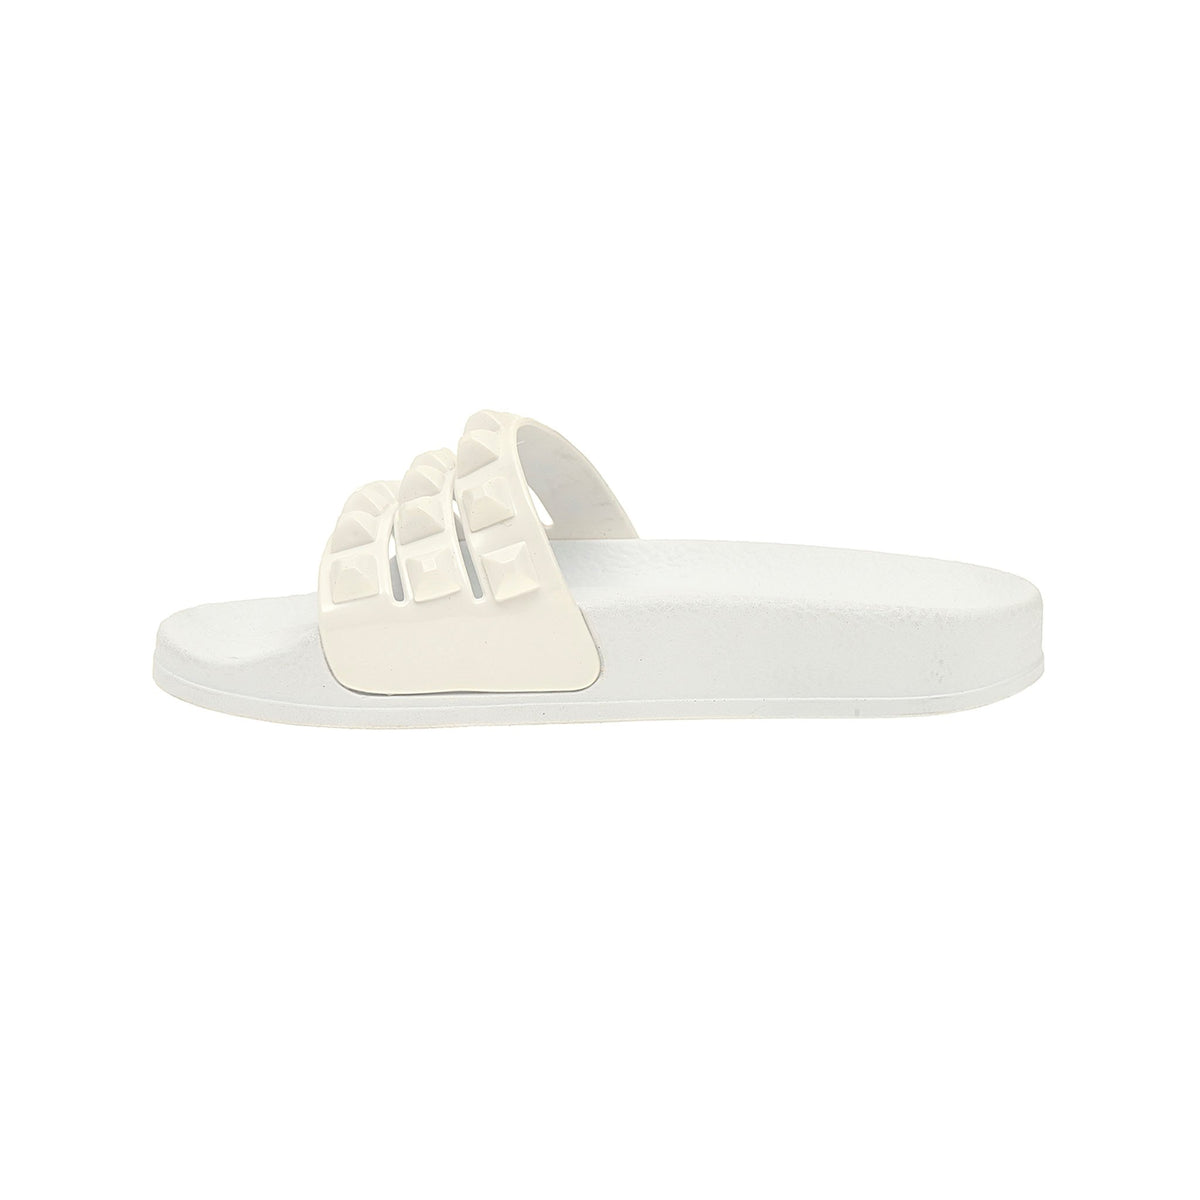 White 3 strap jelly sandals for kids, summer kids slides, white jelly kids sandals from minicarmensol.